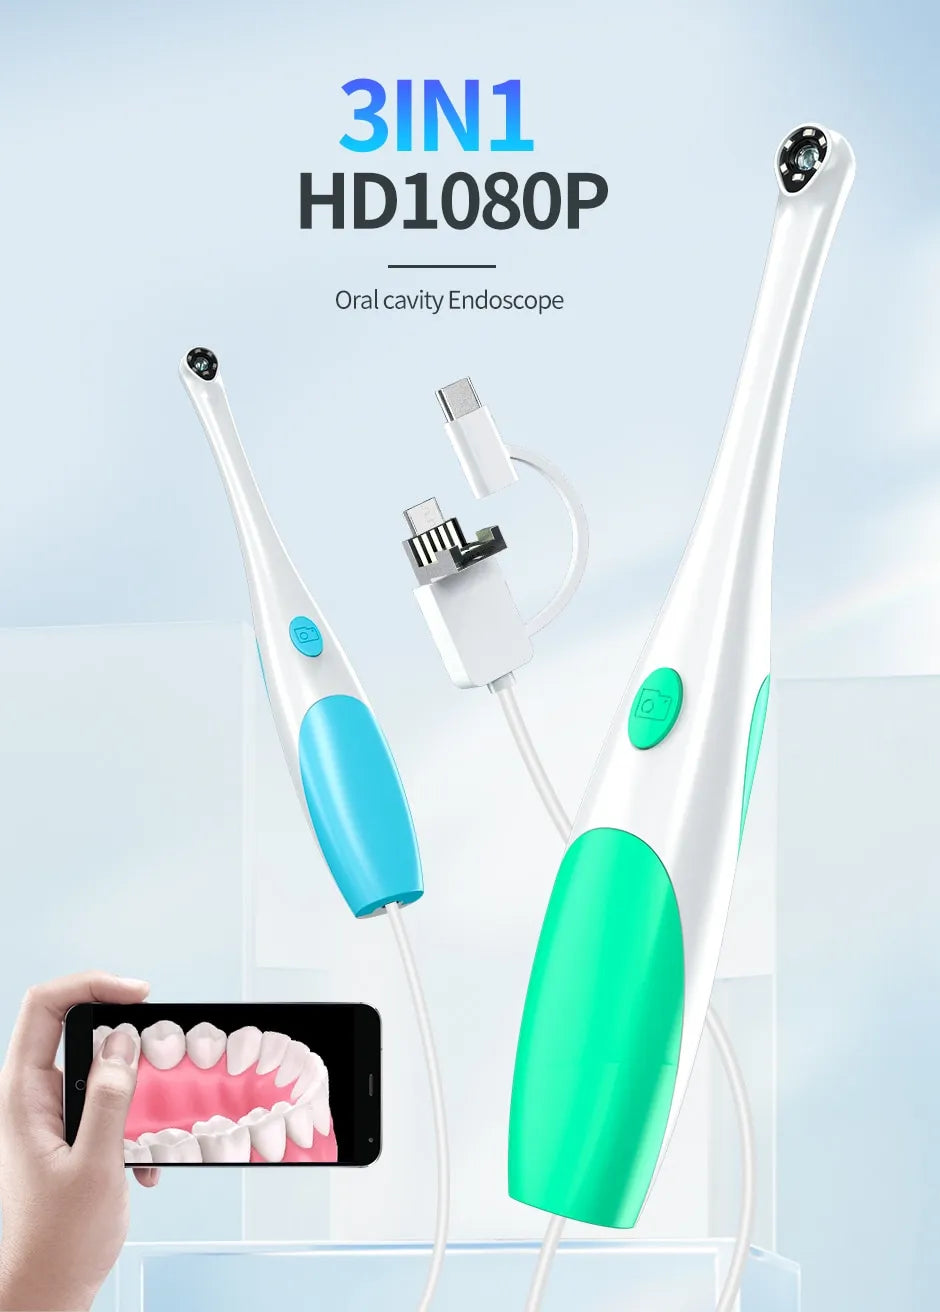 HD 1080P Intraoral Camera Mini 3 In1-Oral Examination Camera IP67 Waterproof Teeth Detecting Endoscope Cameras -Endoscope Cameras For Dentist Price In Pakistan